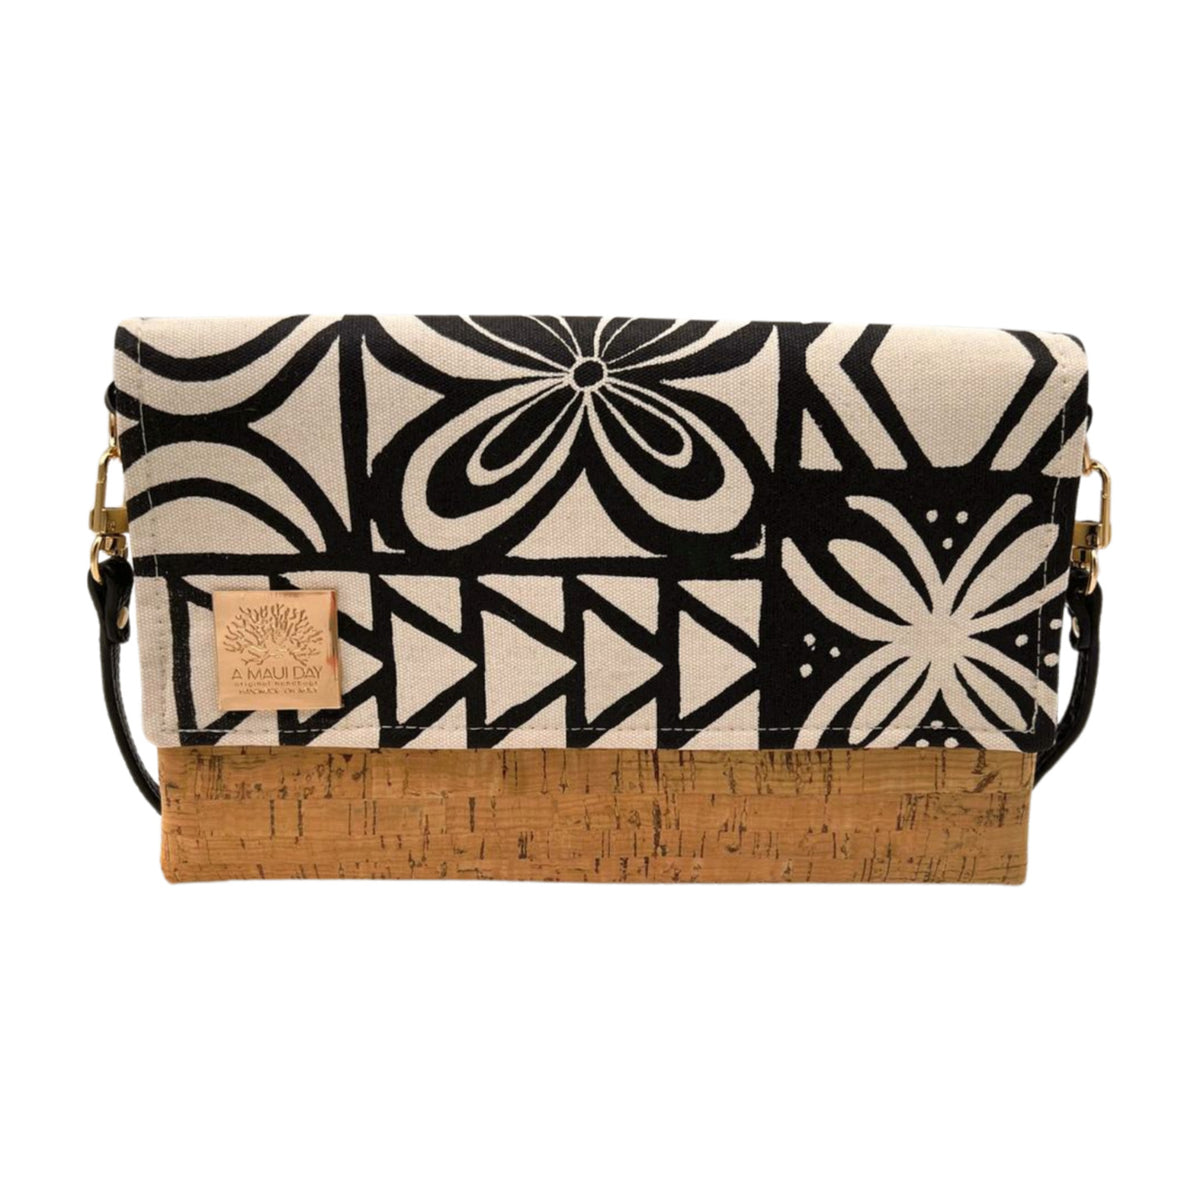 Pop-Up Mākeke - A Maui Day Original Handbags - Handprinted Fold-Over Handbag - Black Kapa on Canvas - Front View